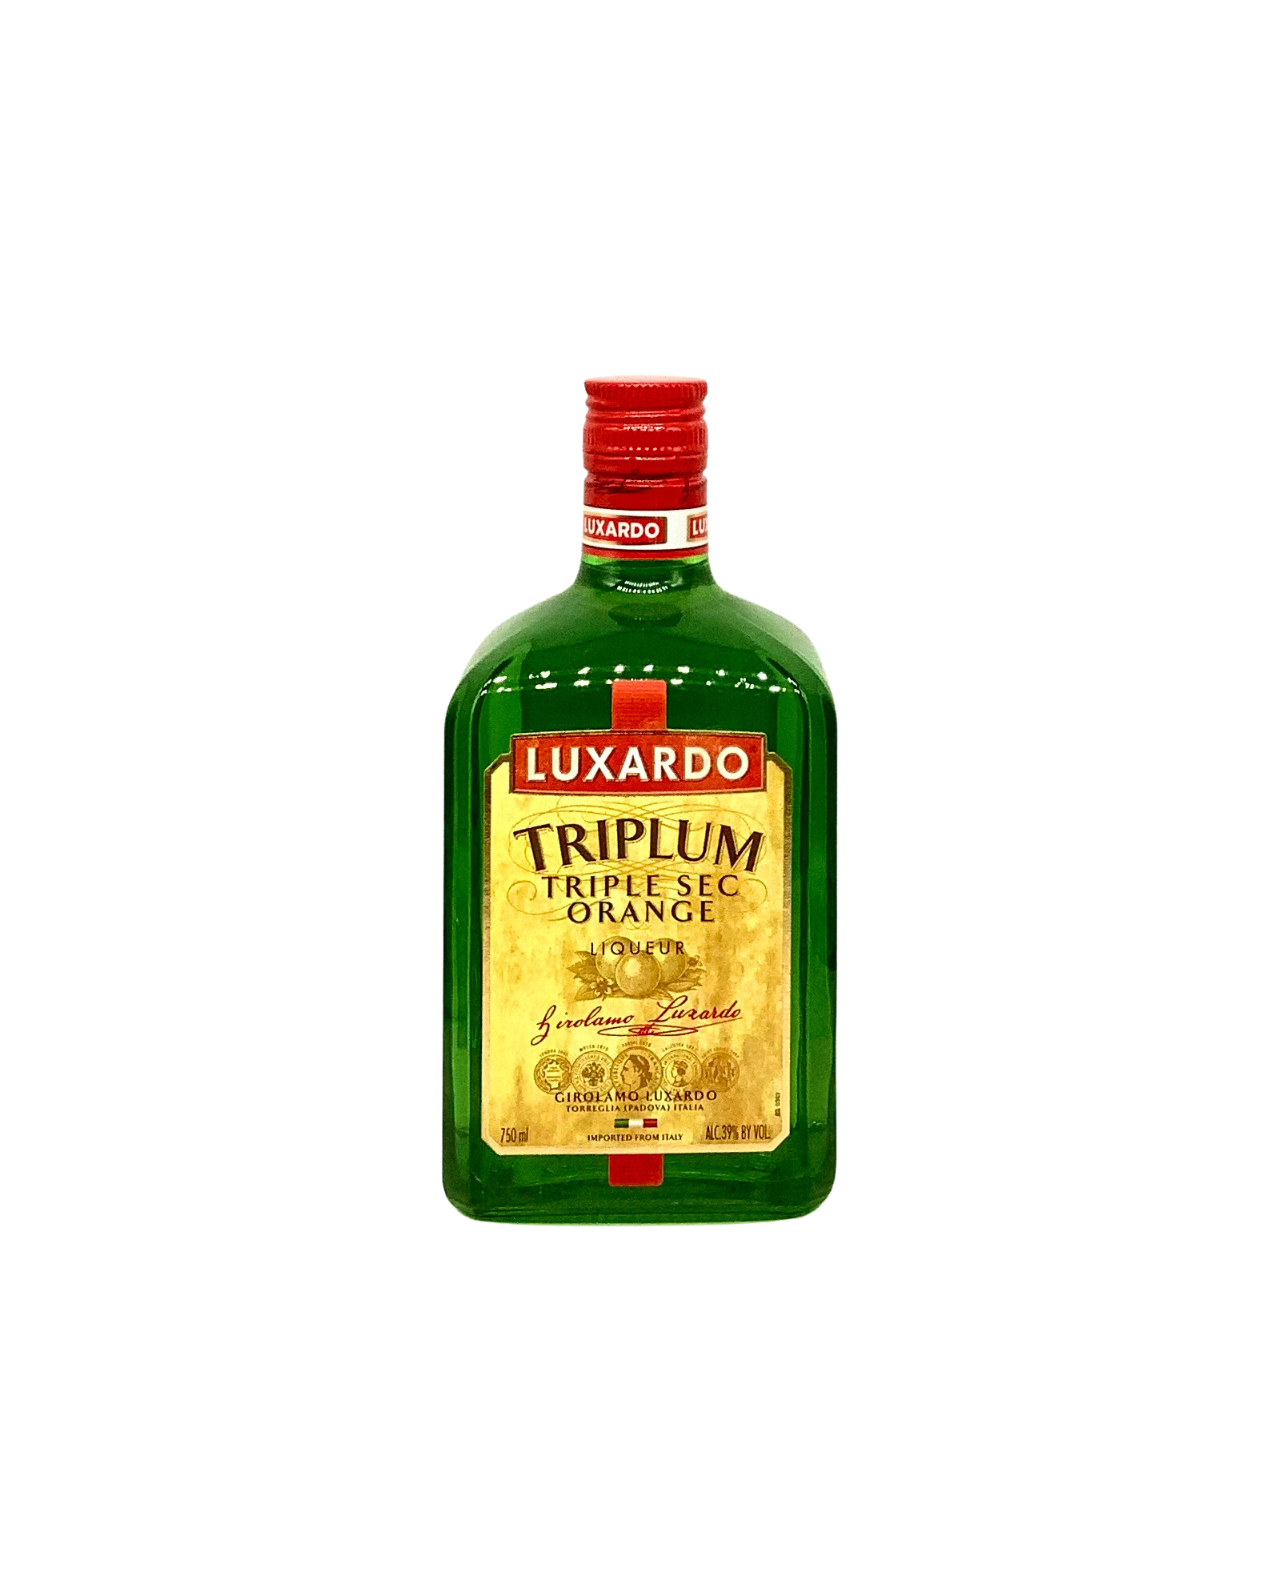 Luxardo "Triplum" Triple Sec Orange Liqueur 750ml